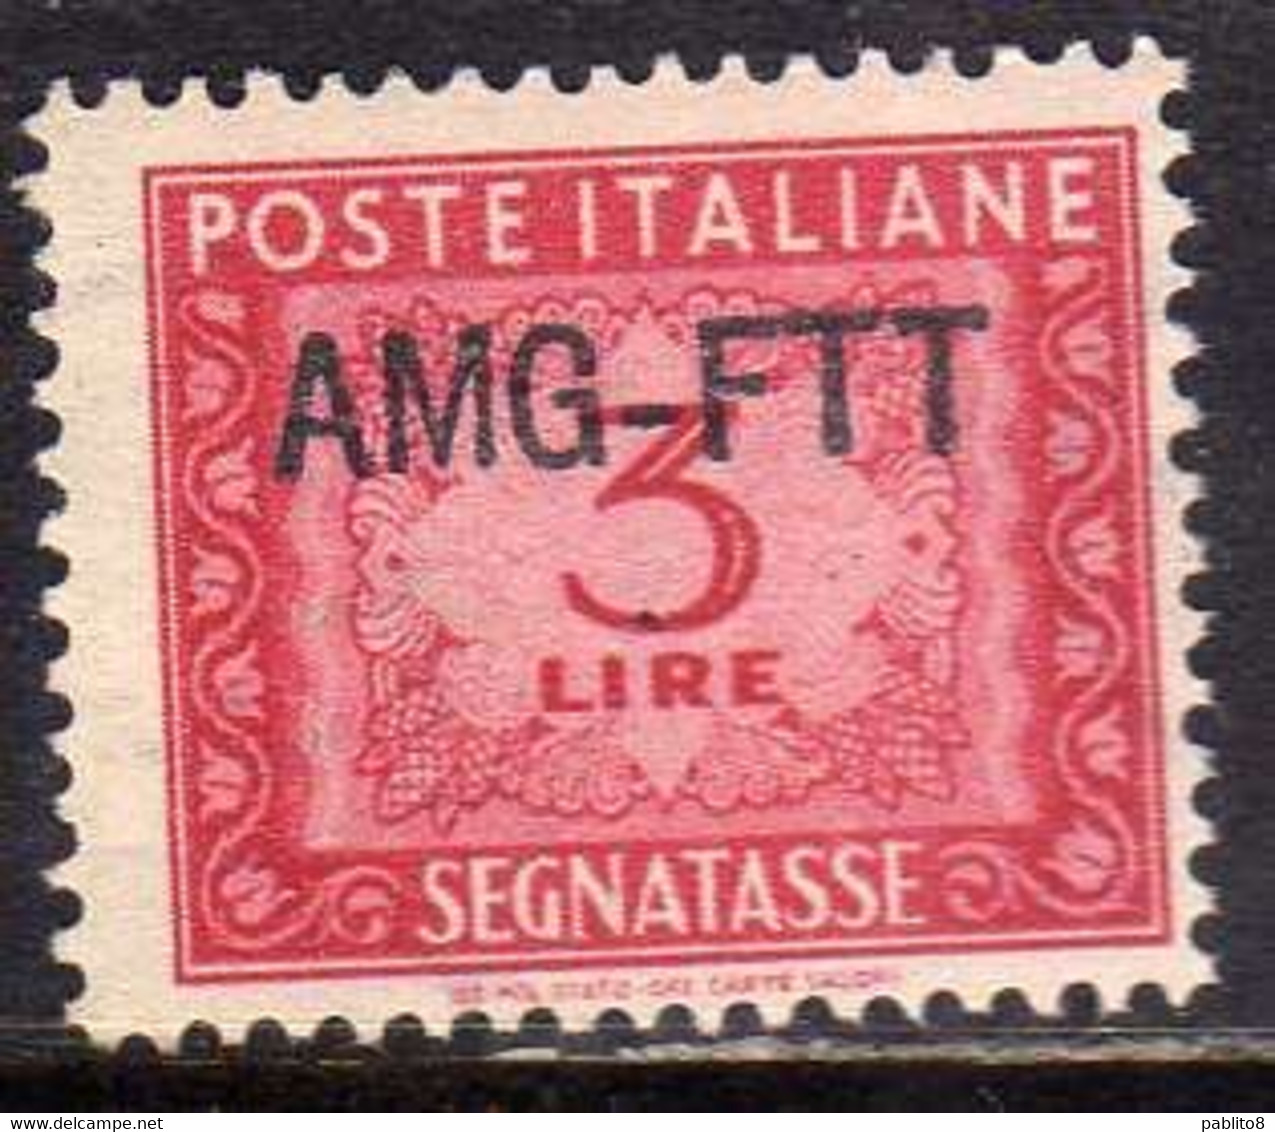 TRIESTE A 1949 1954 AMG-FTT SOPRASTAMPATO D'ITALIA ITALY OVERPRINTED SEGNATASSE POSTAGE DUE TAXES TASSE LIRE 3 MNH - Taxe